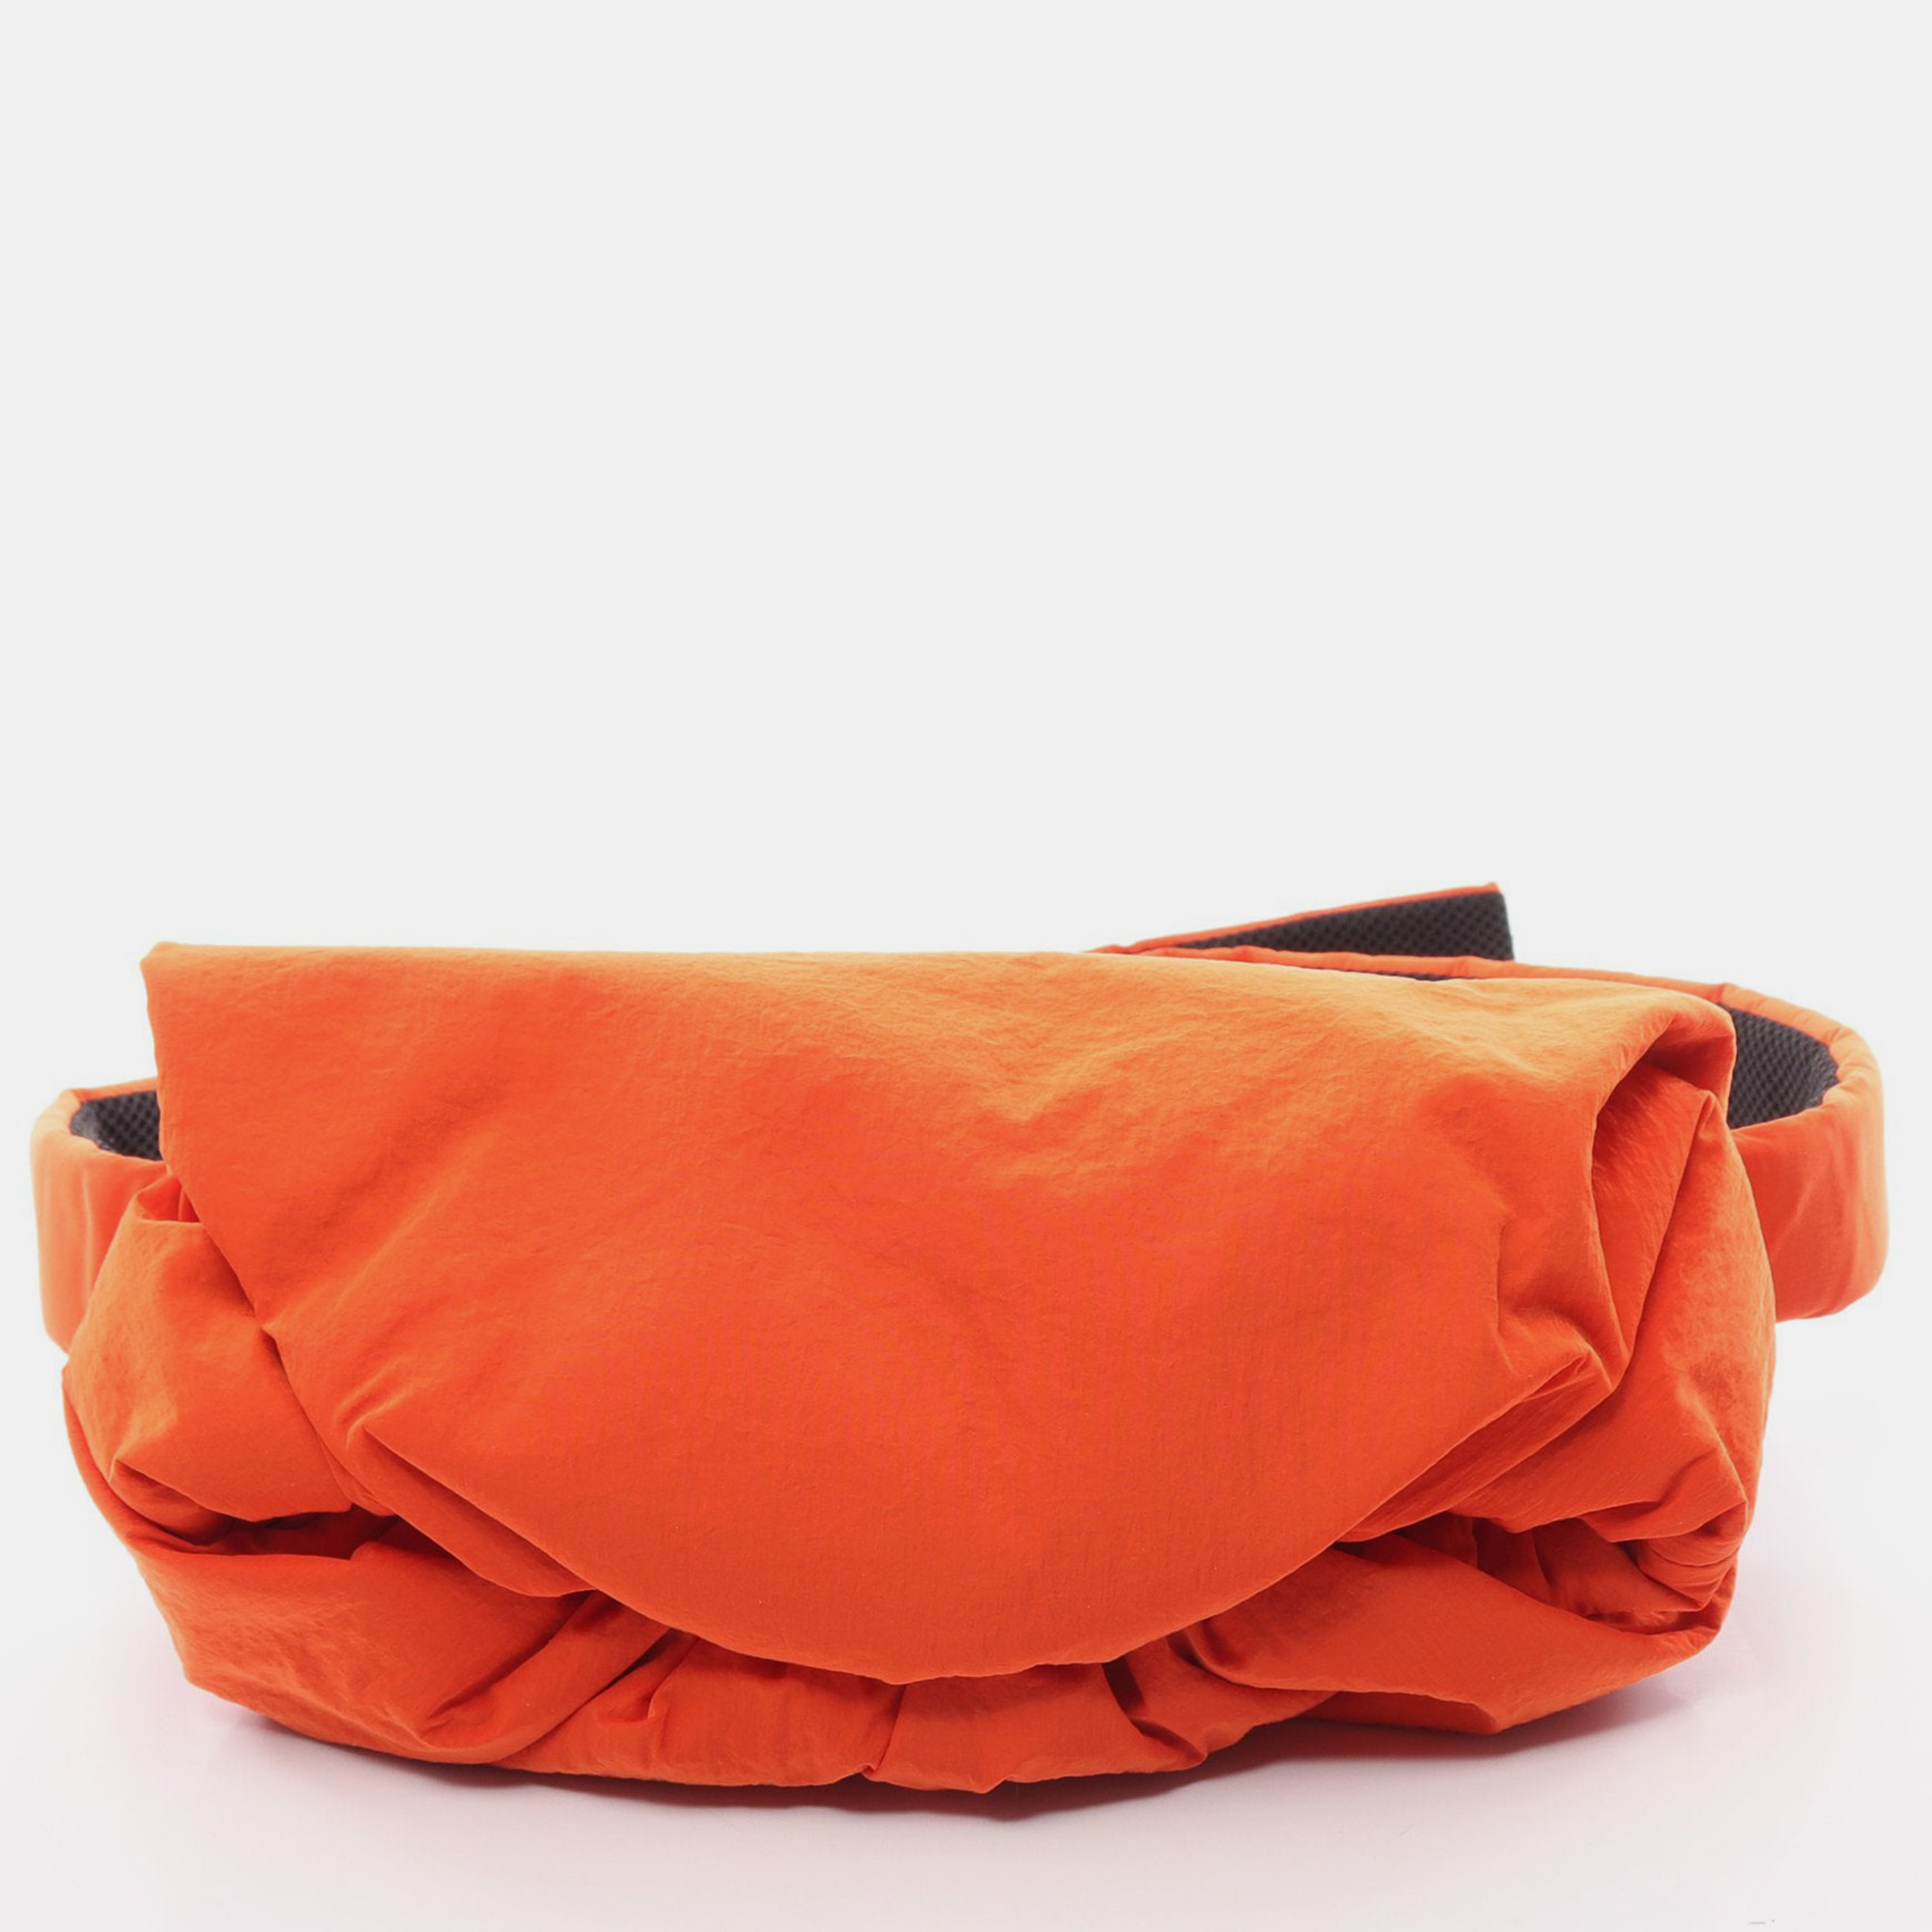 Bottega veneta body pouch body bag nylon orange red clasp